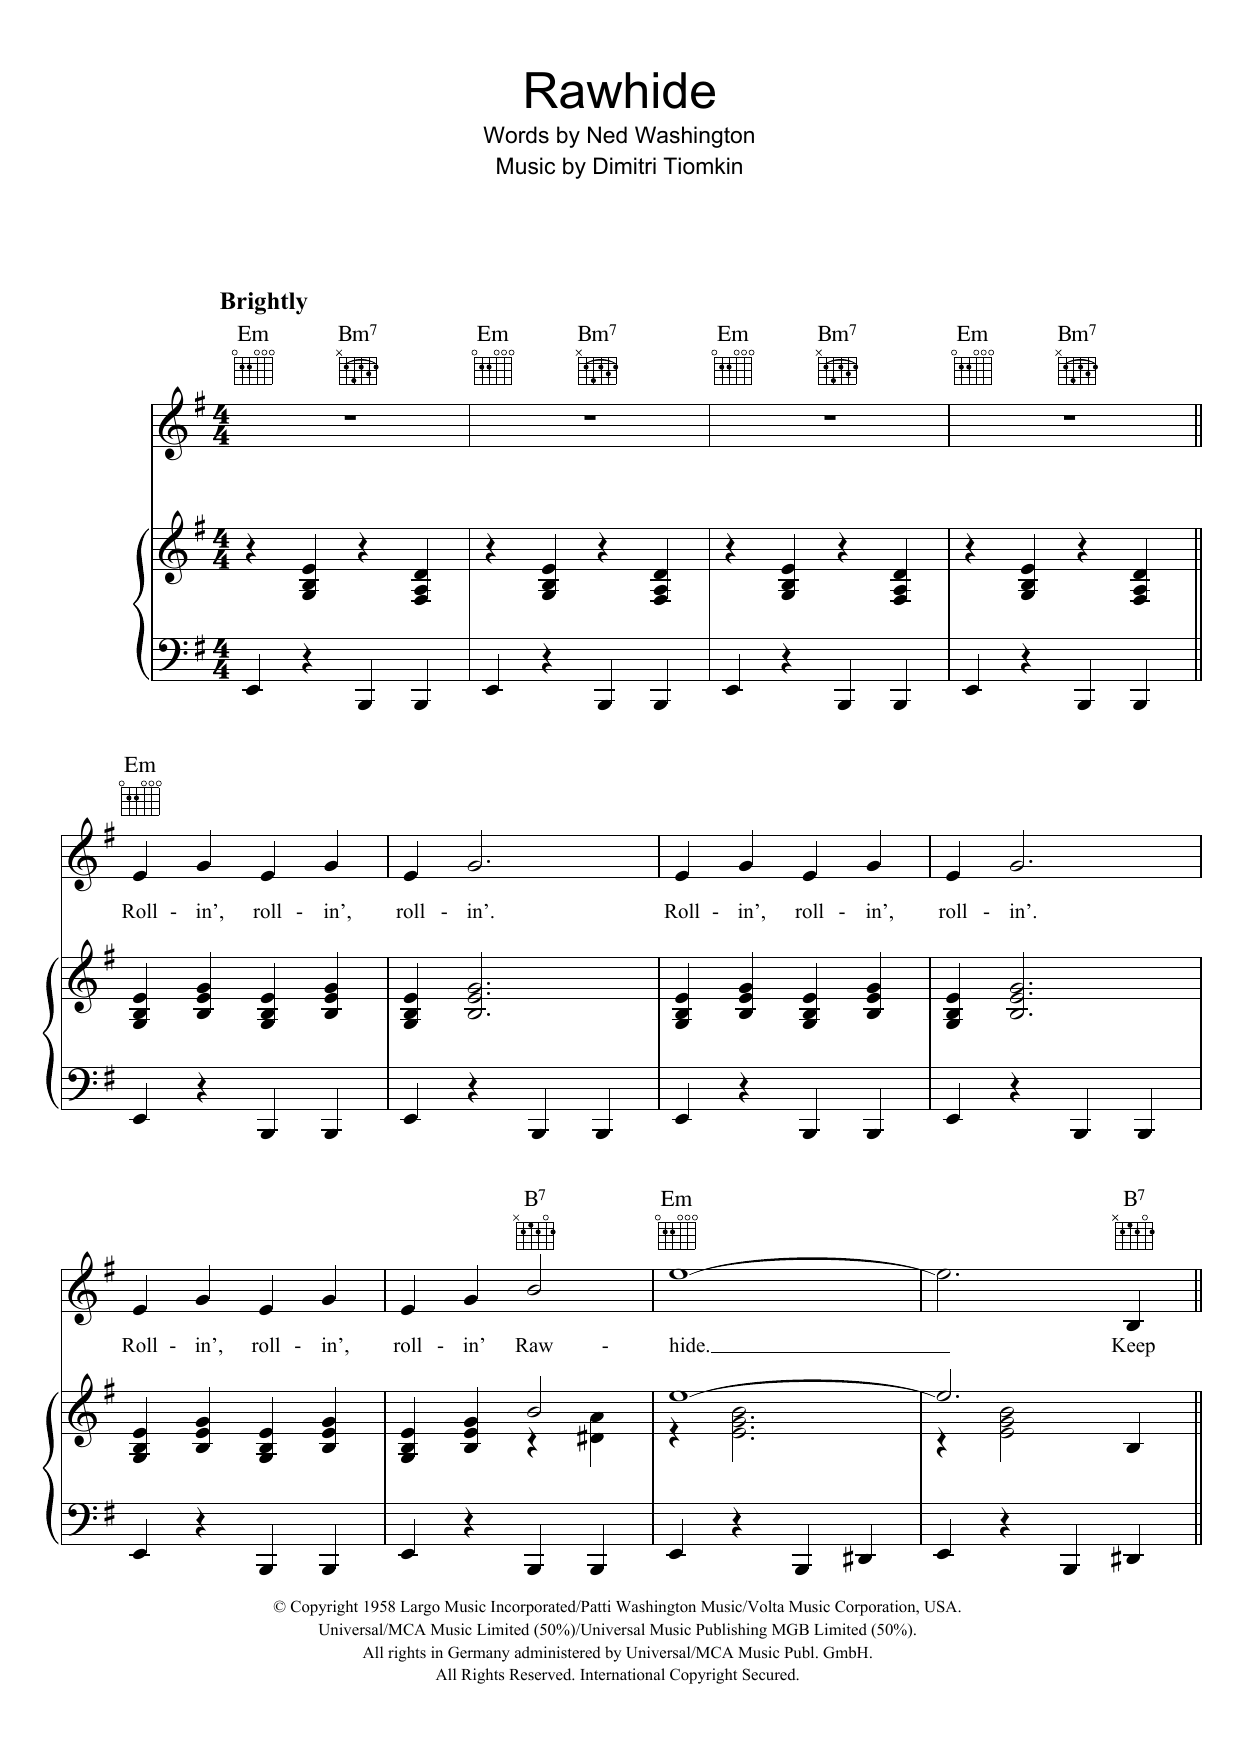 Dimitri Tiomkin Rawhide Sheet Music Notes & Chords for Melody Line, Lyrics & Chords - Download or Print PDF